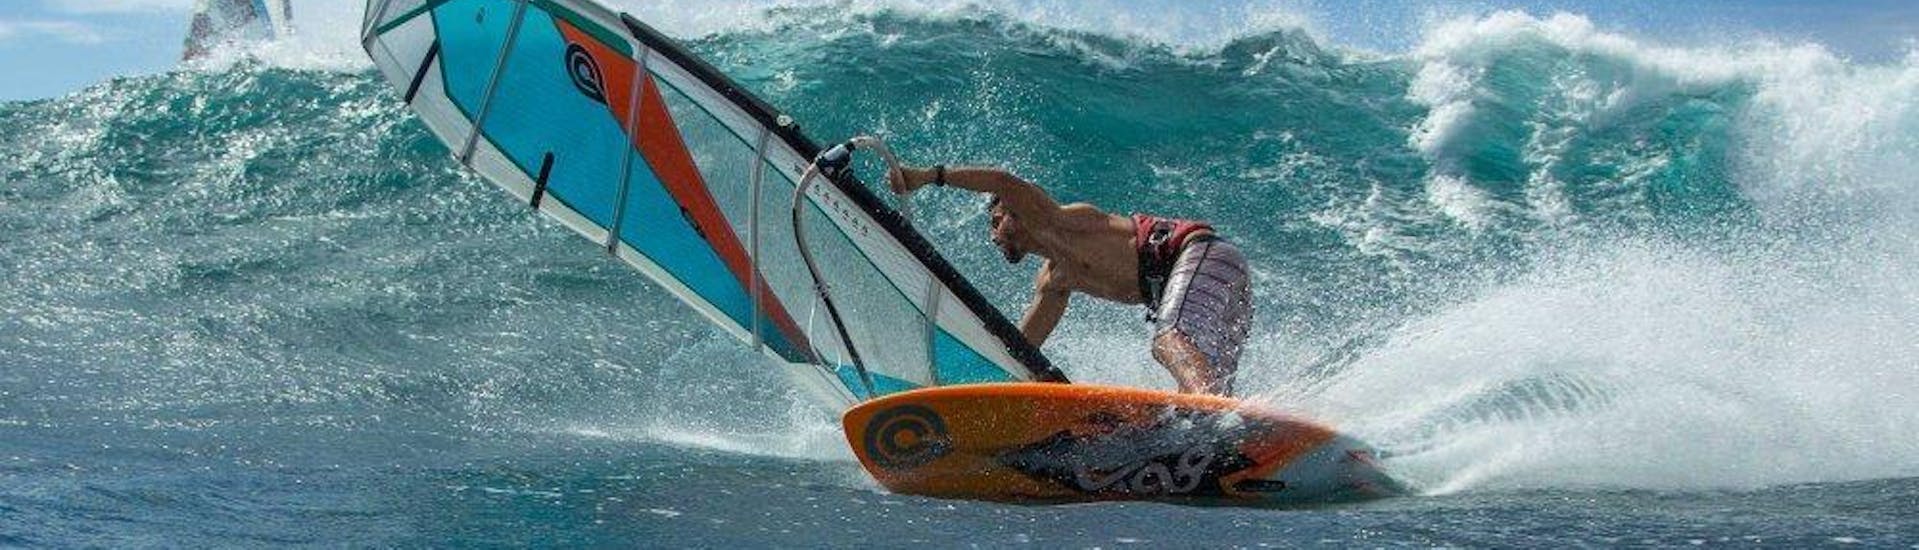 windsurfing-for-teens-and-adults-advanced-1-cbcm-fuerteventura-hero